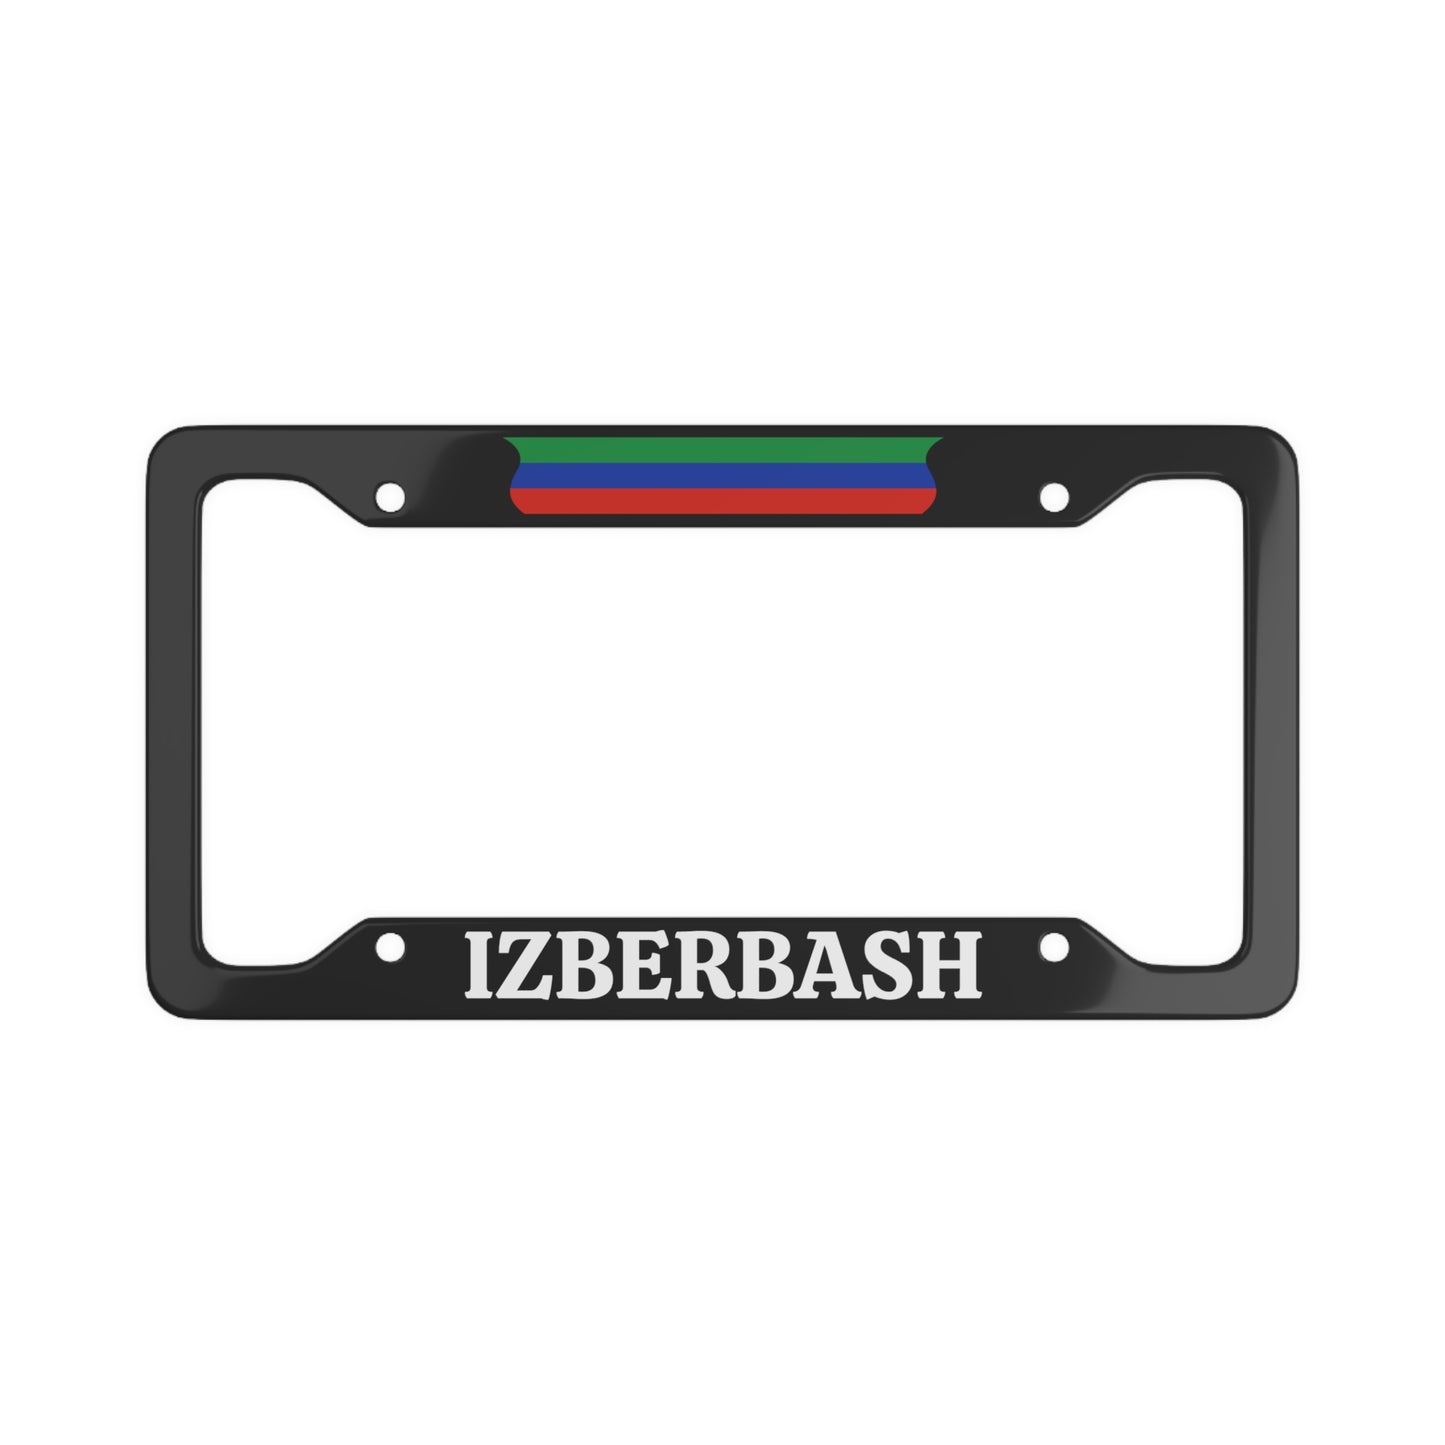 Izberbash License Plate Frame